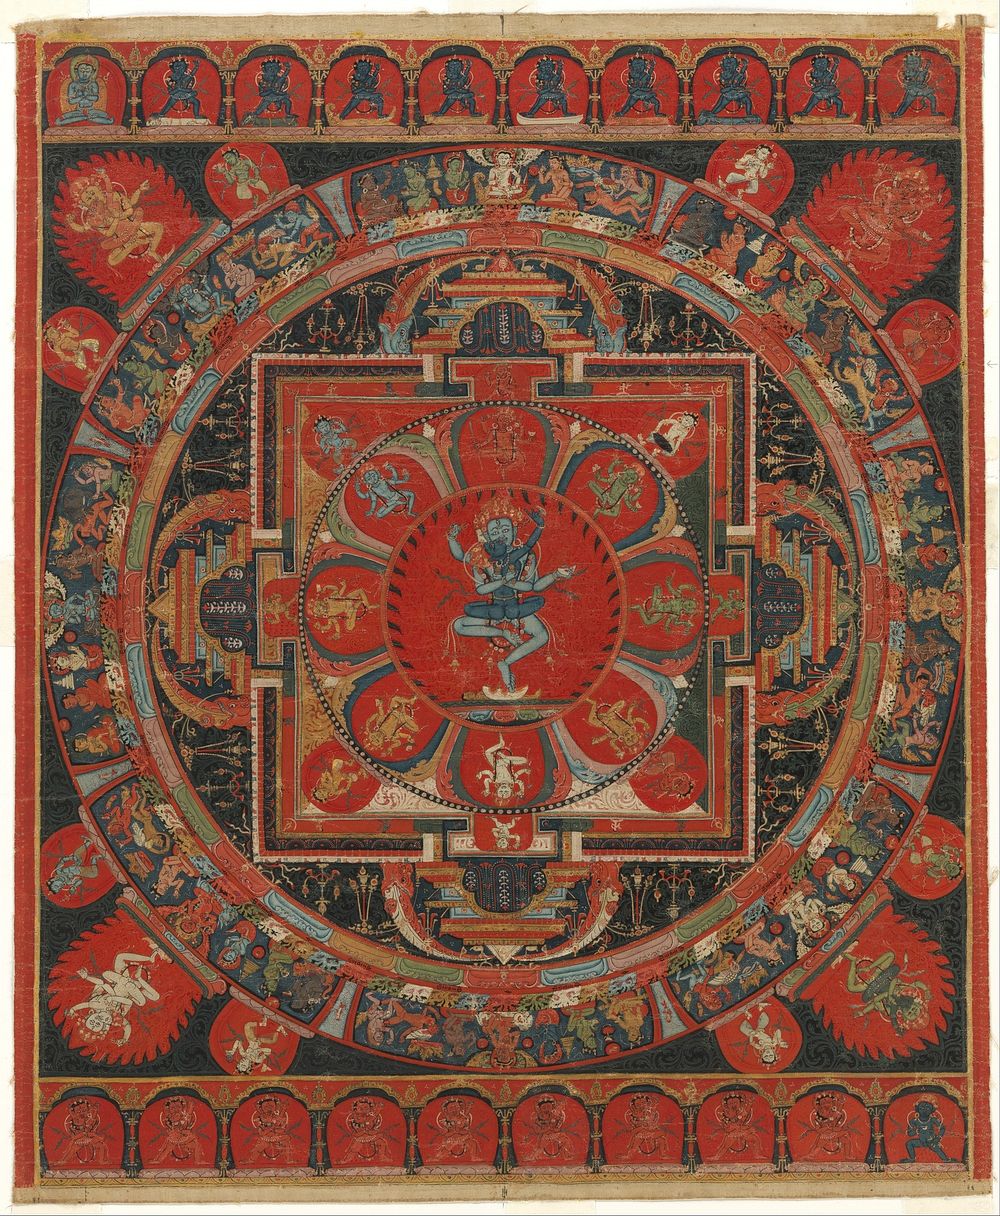 Hevajra Mandala. Original public domain image from The MET Museum